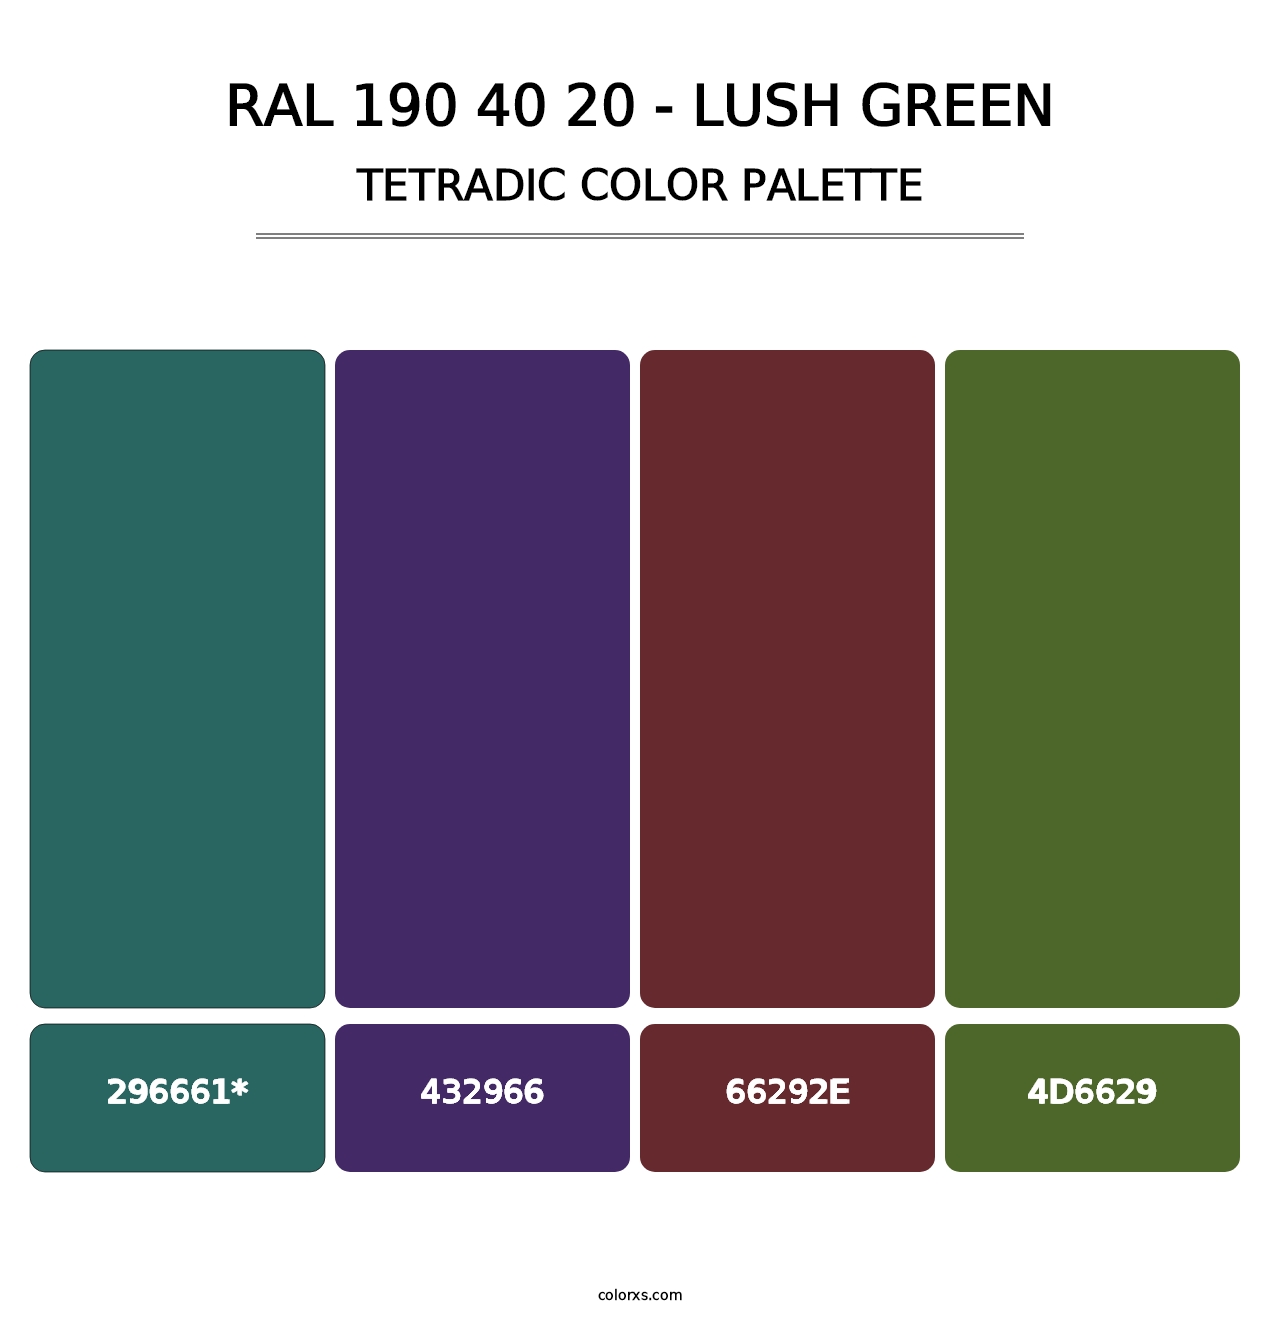 RAL 190 40 20 - Lush Green - Tetradic Color Palette